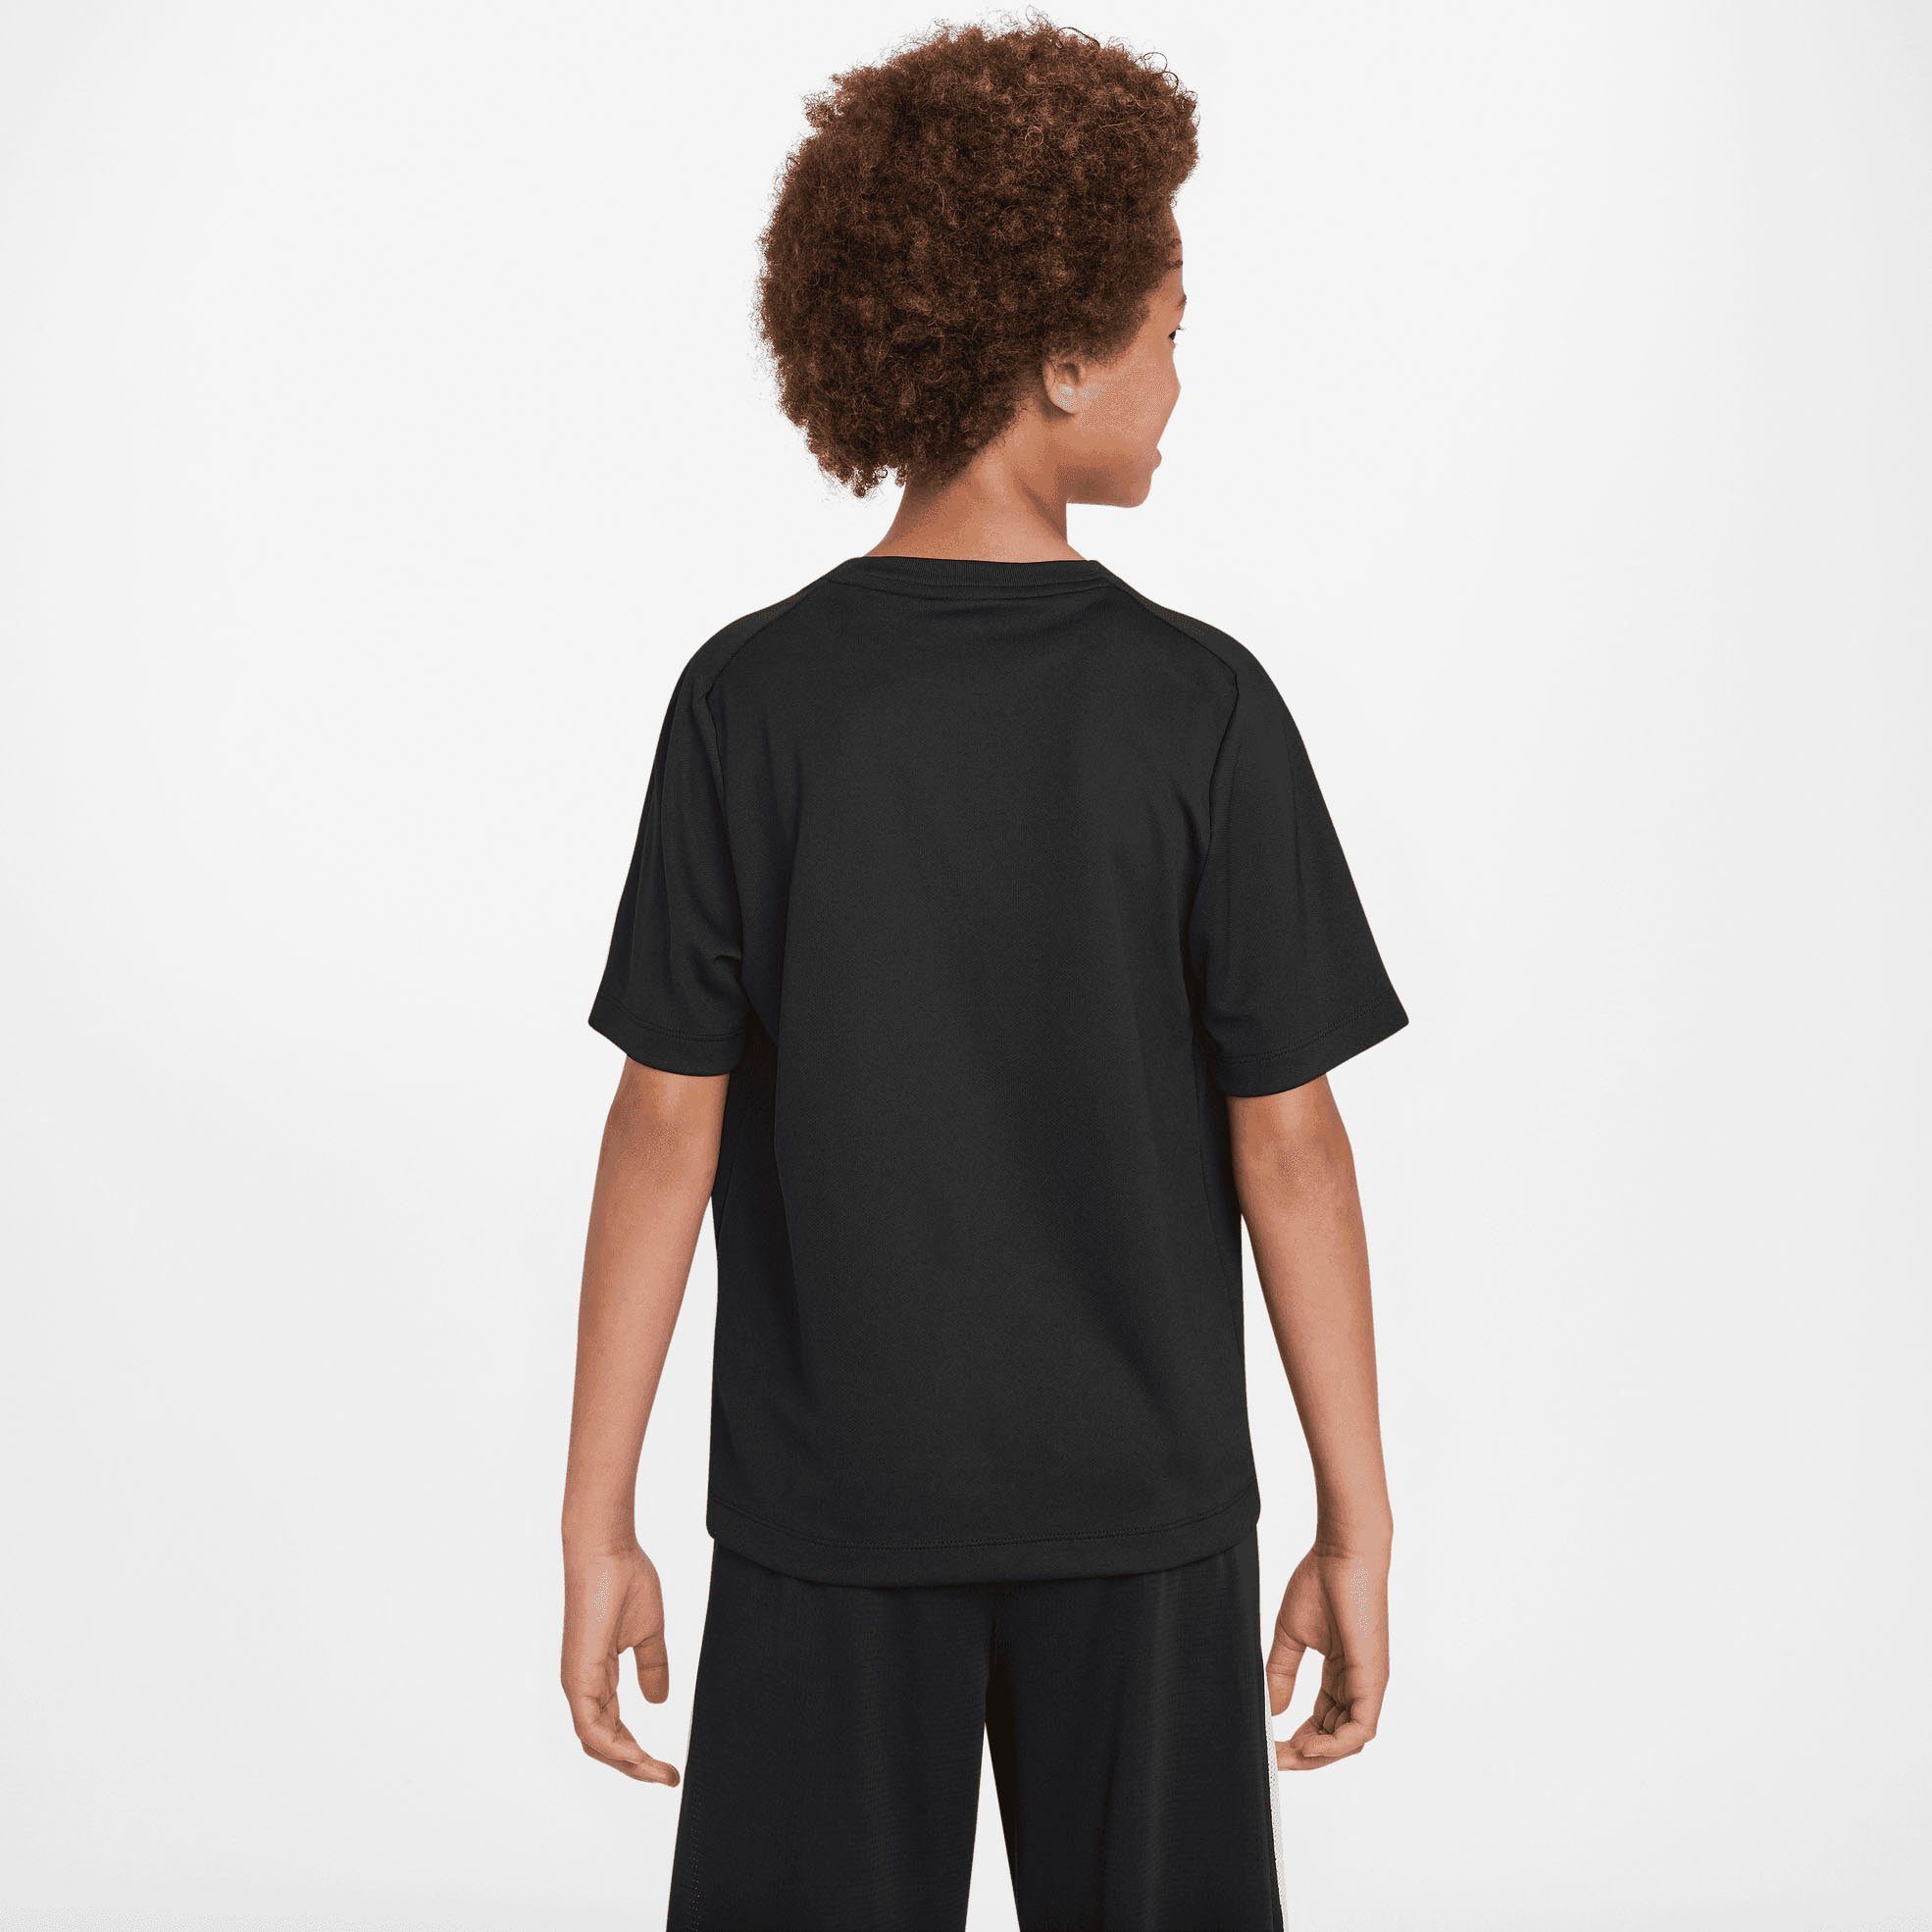 DRI-FIT MULTI+ BLACK/WHITE (BOYS) TRAINING BIG Nike KIDS' GRAPHIC Trainingsshirt TOP